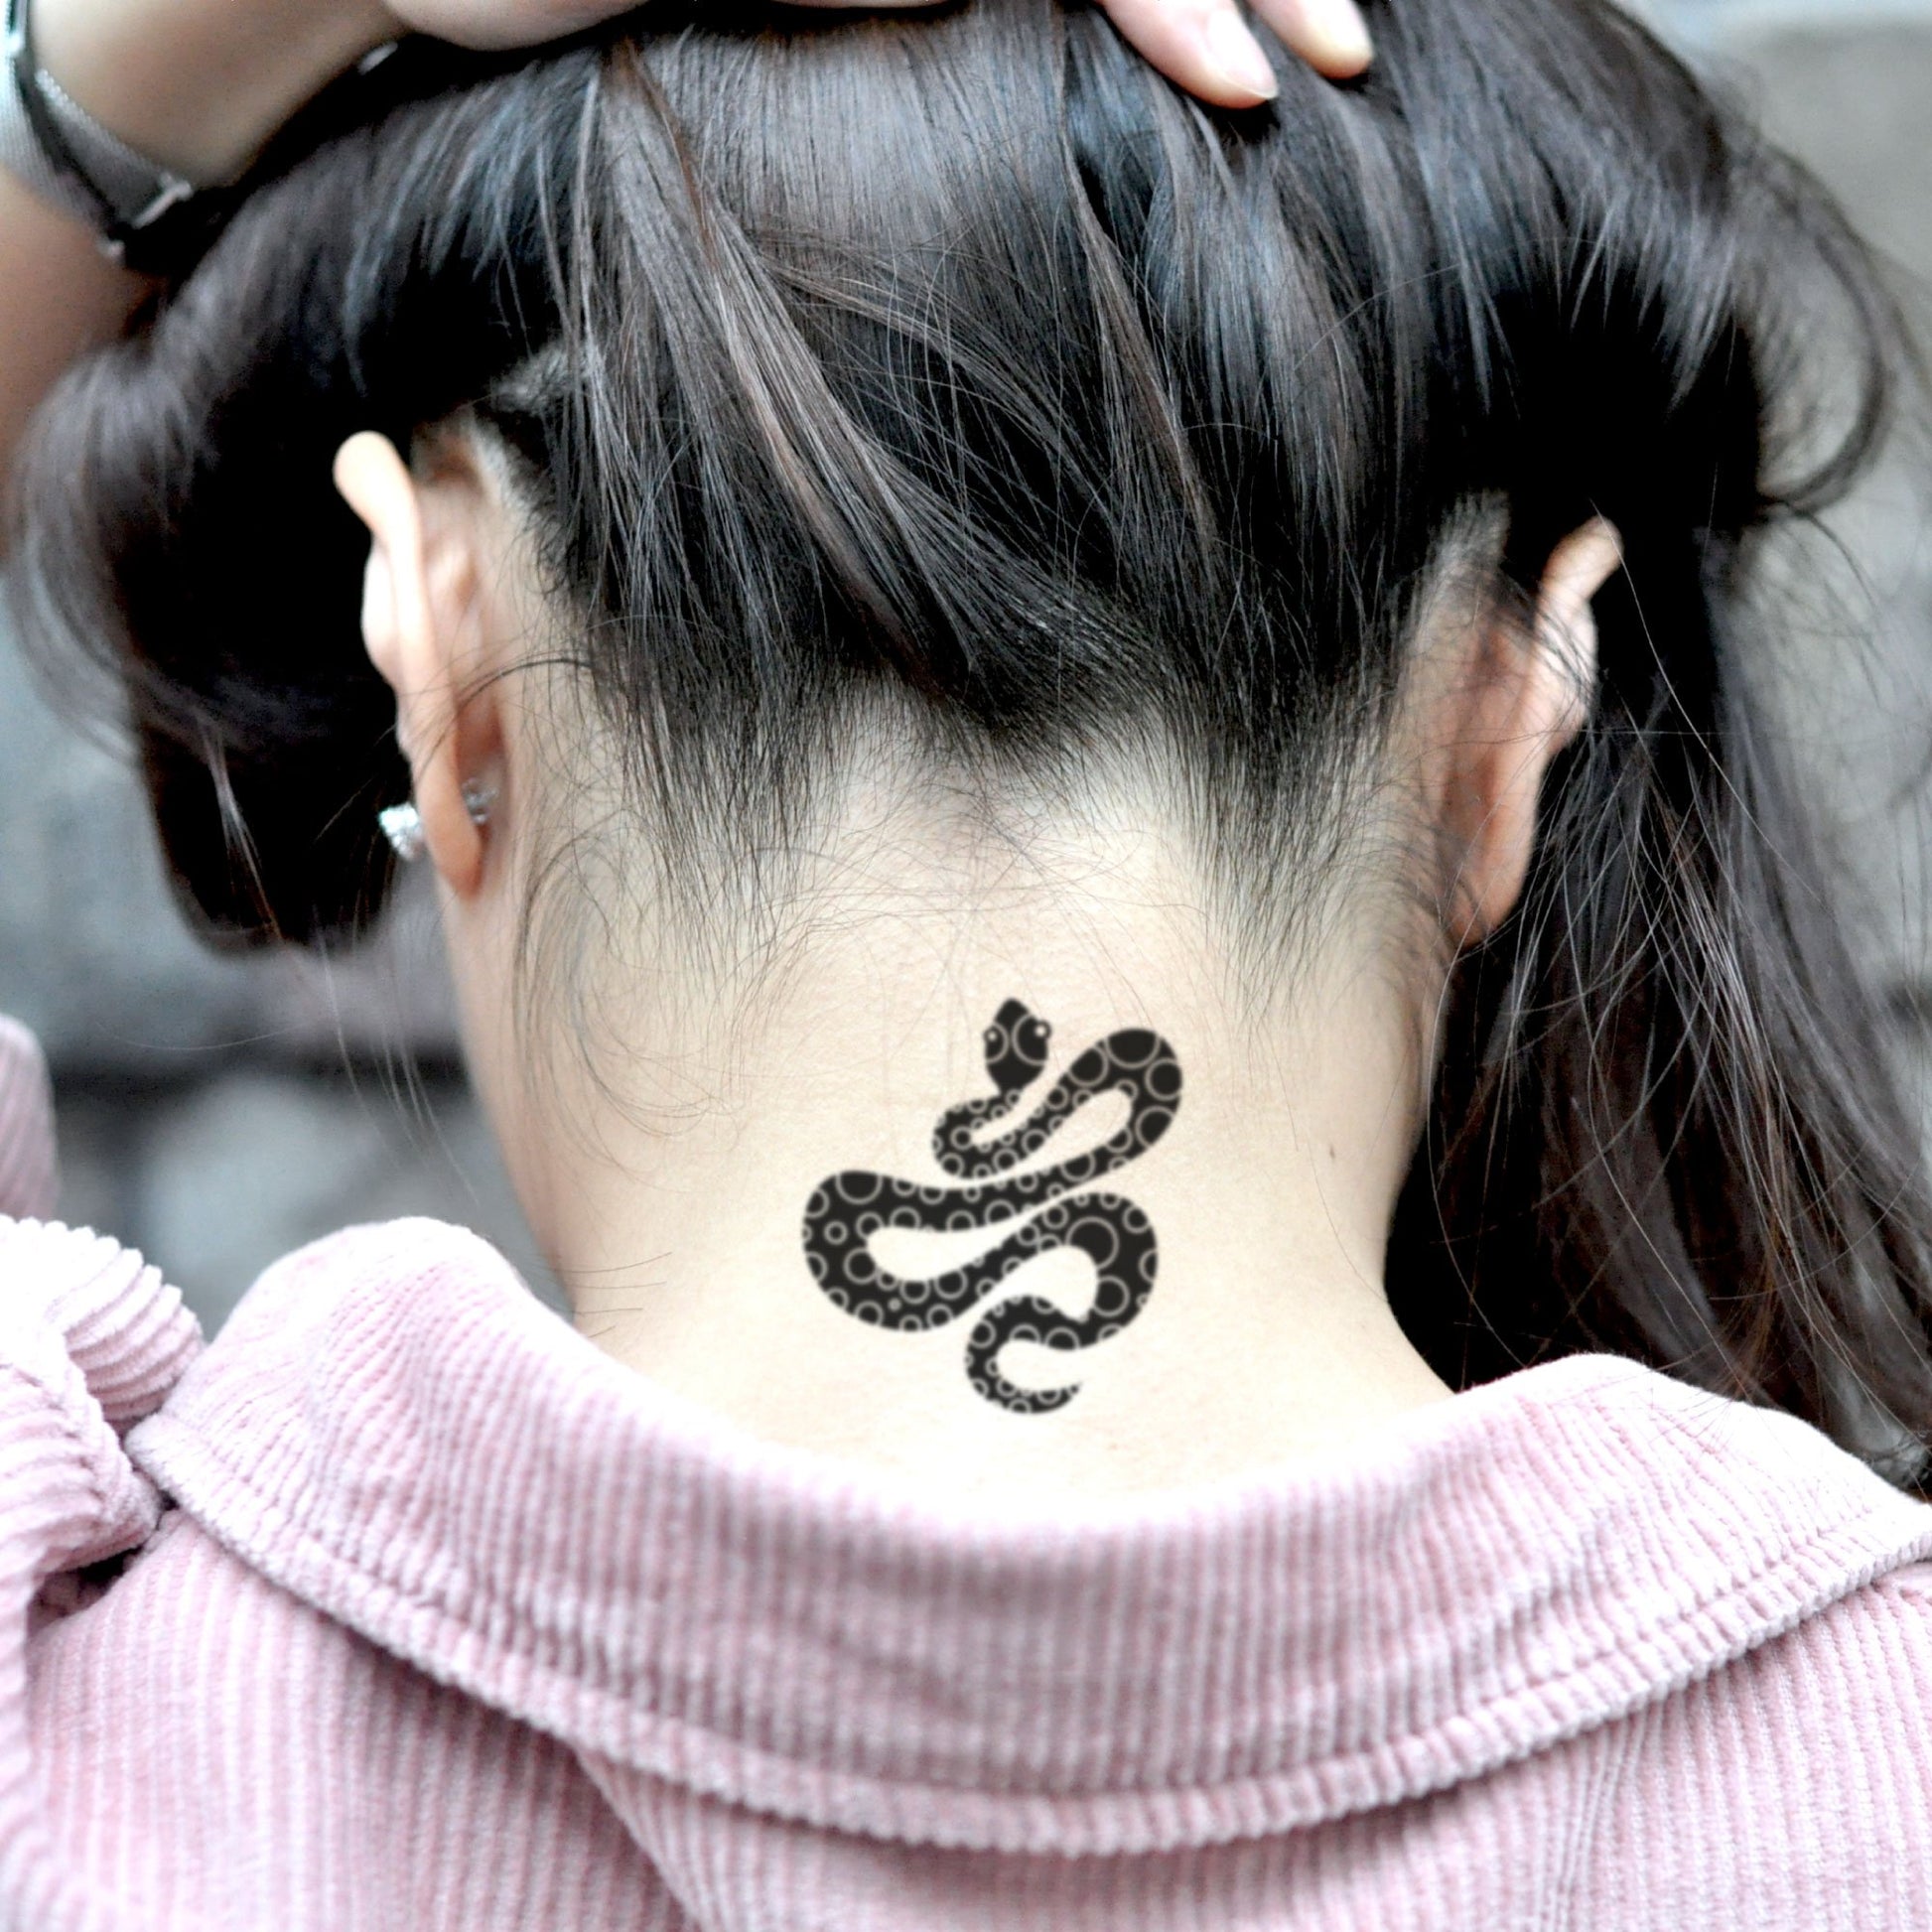 fake small simple snake cobra serpent animal temporary tattoo sticker design idea on neck